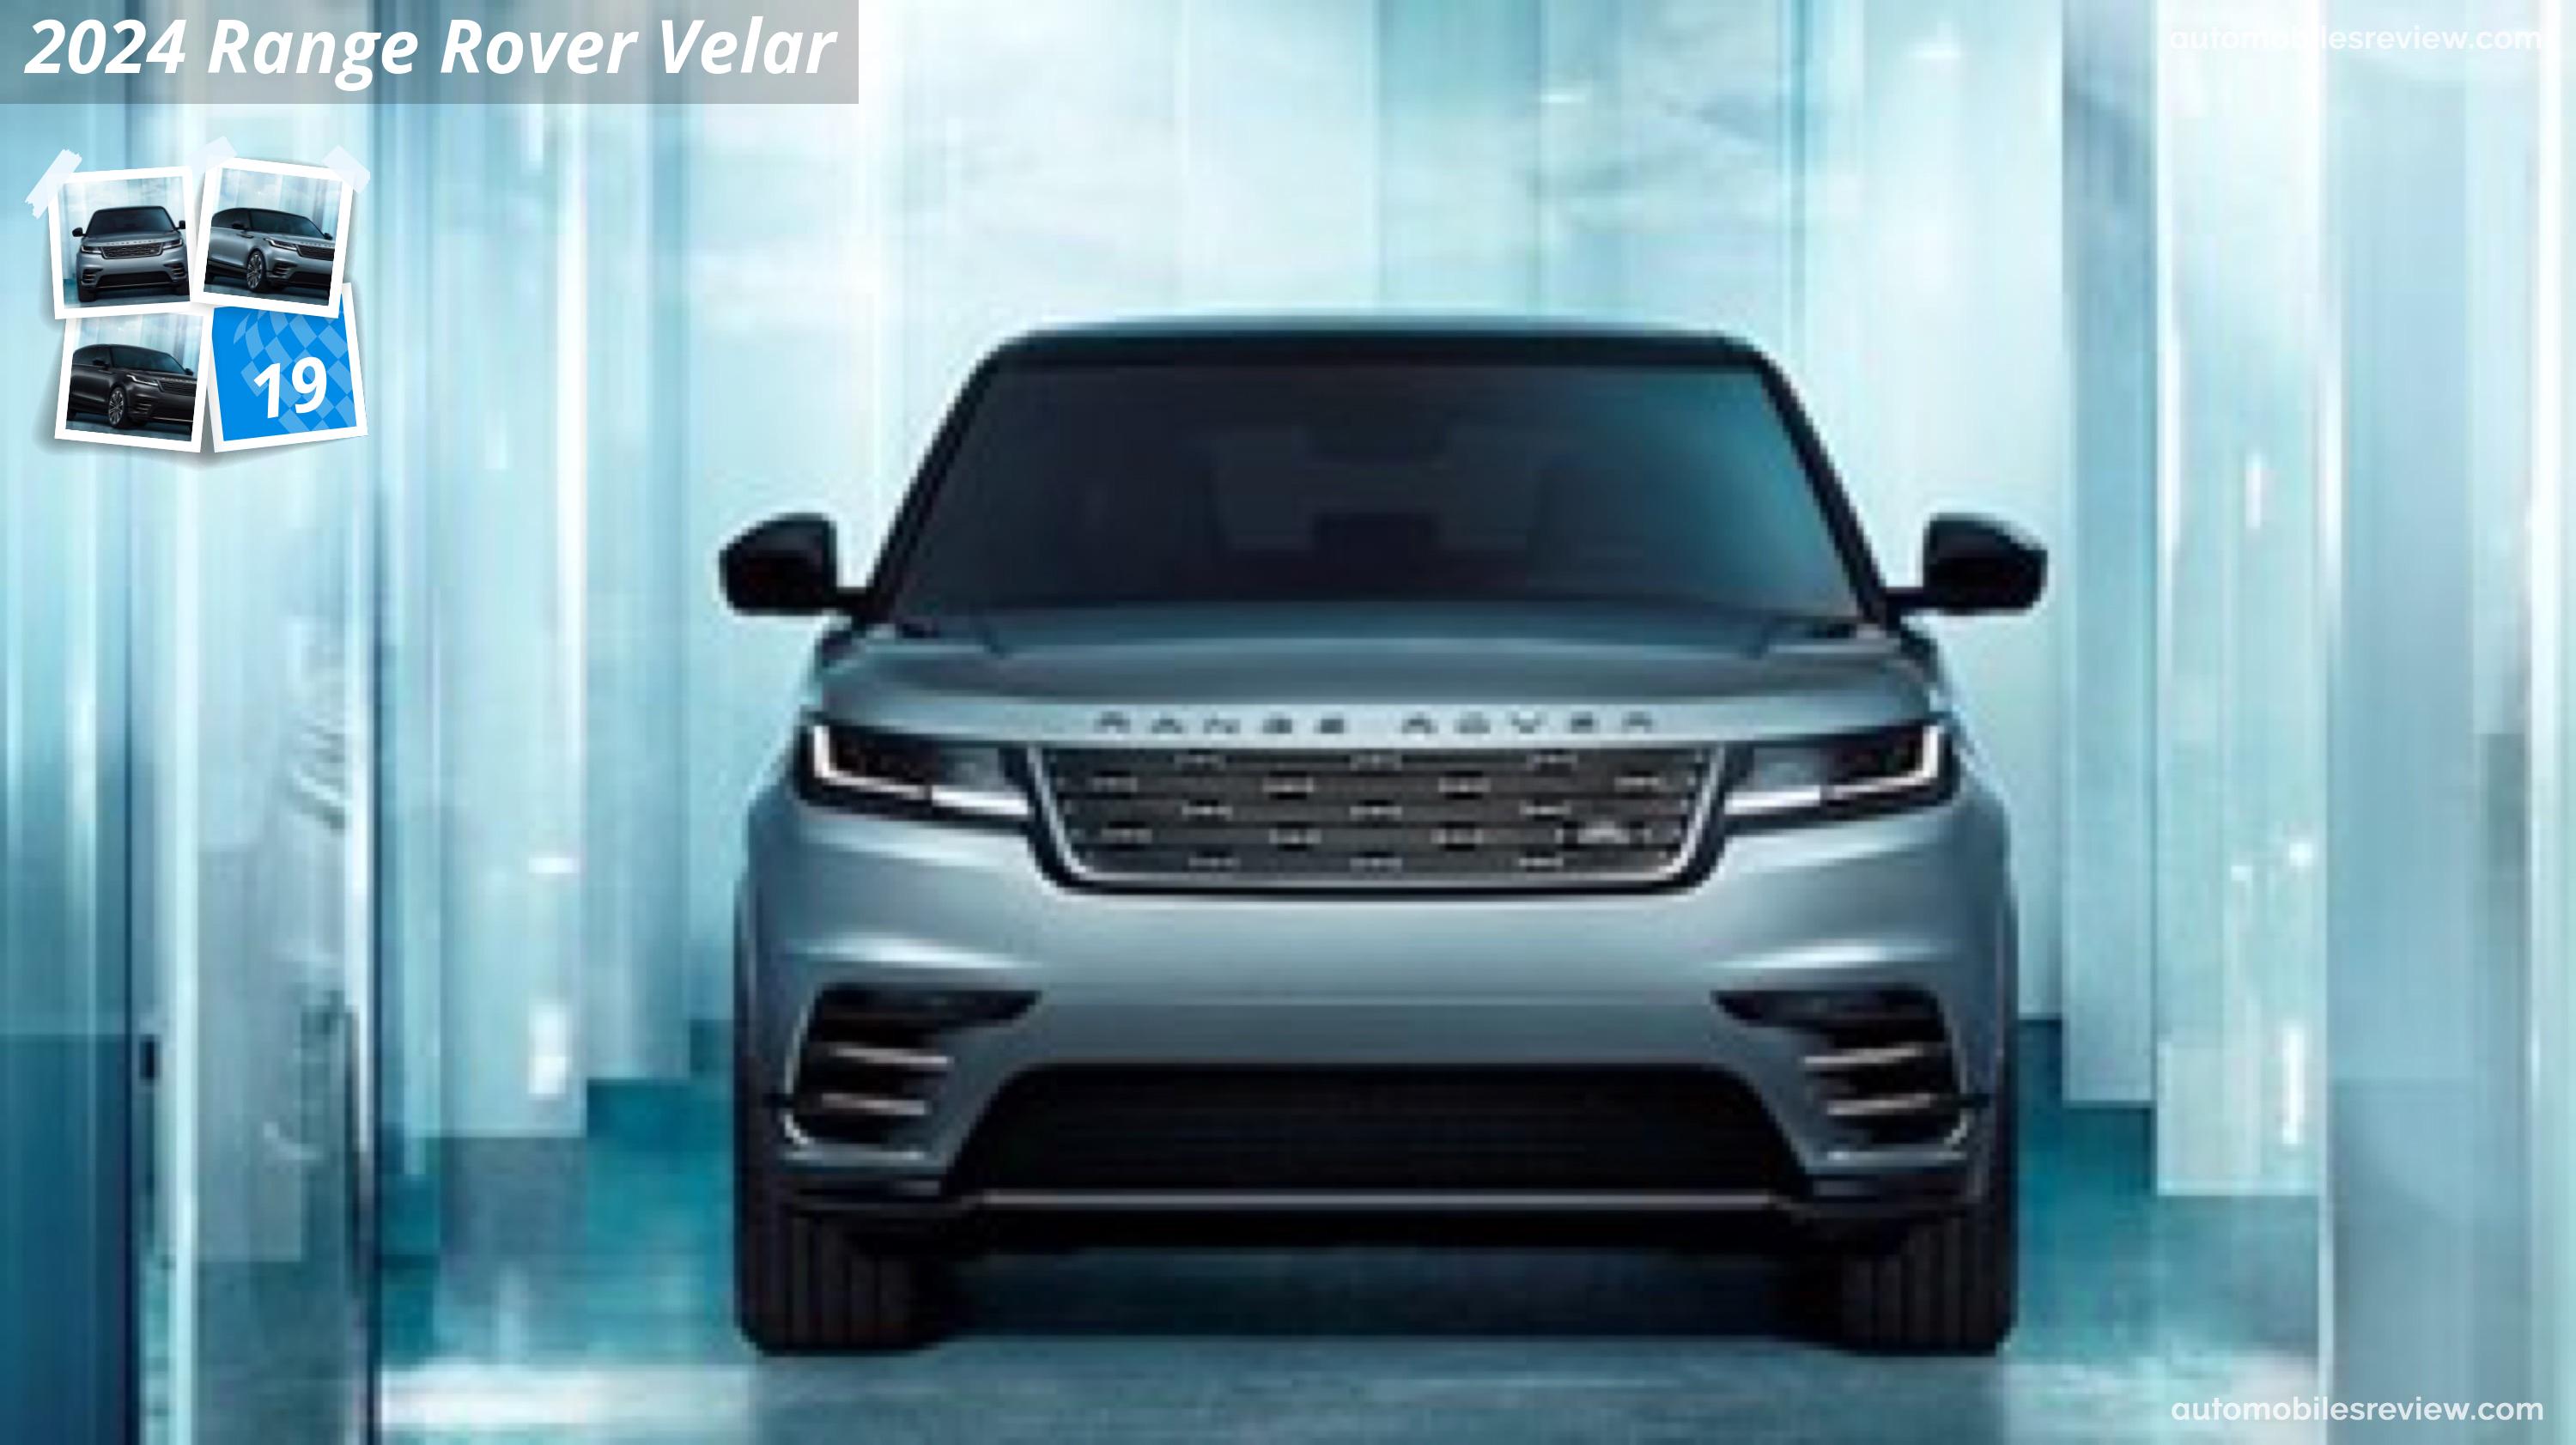 Range Rover Velar (2024) pictures & information